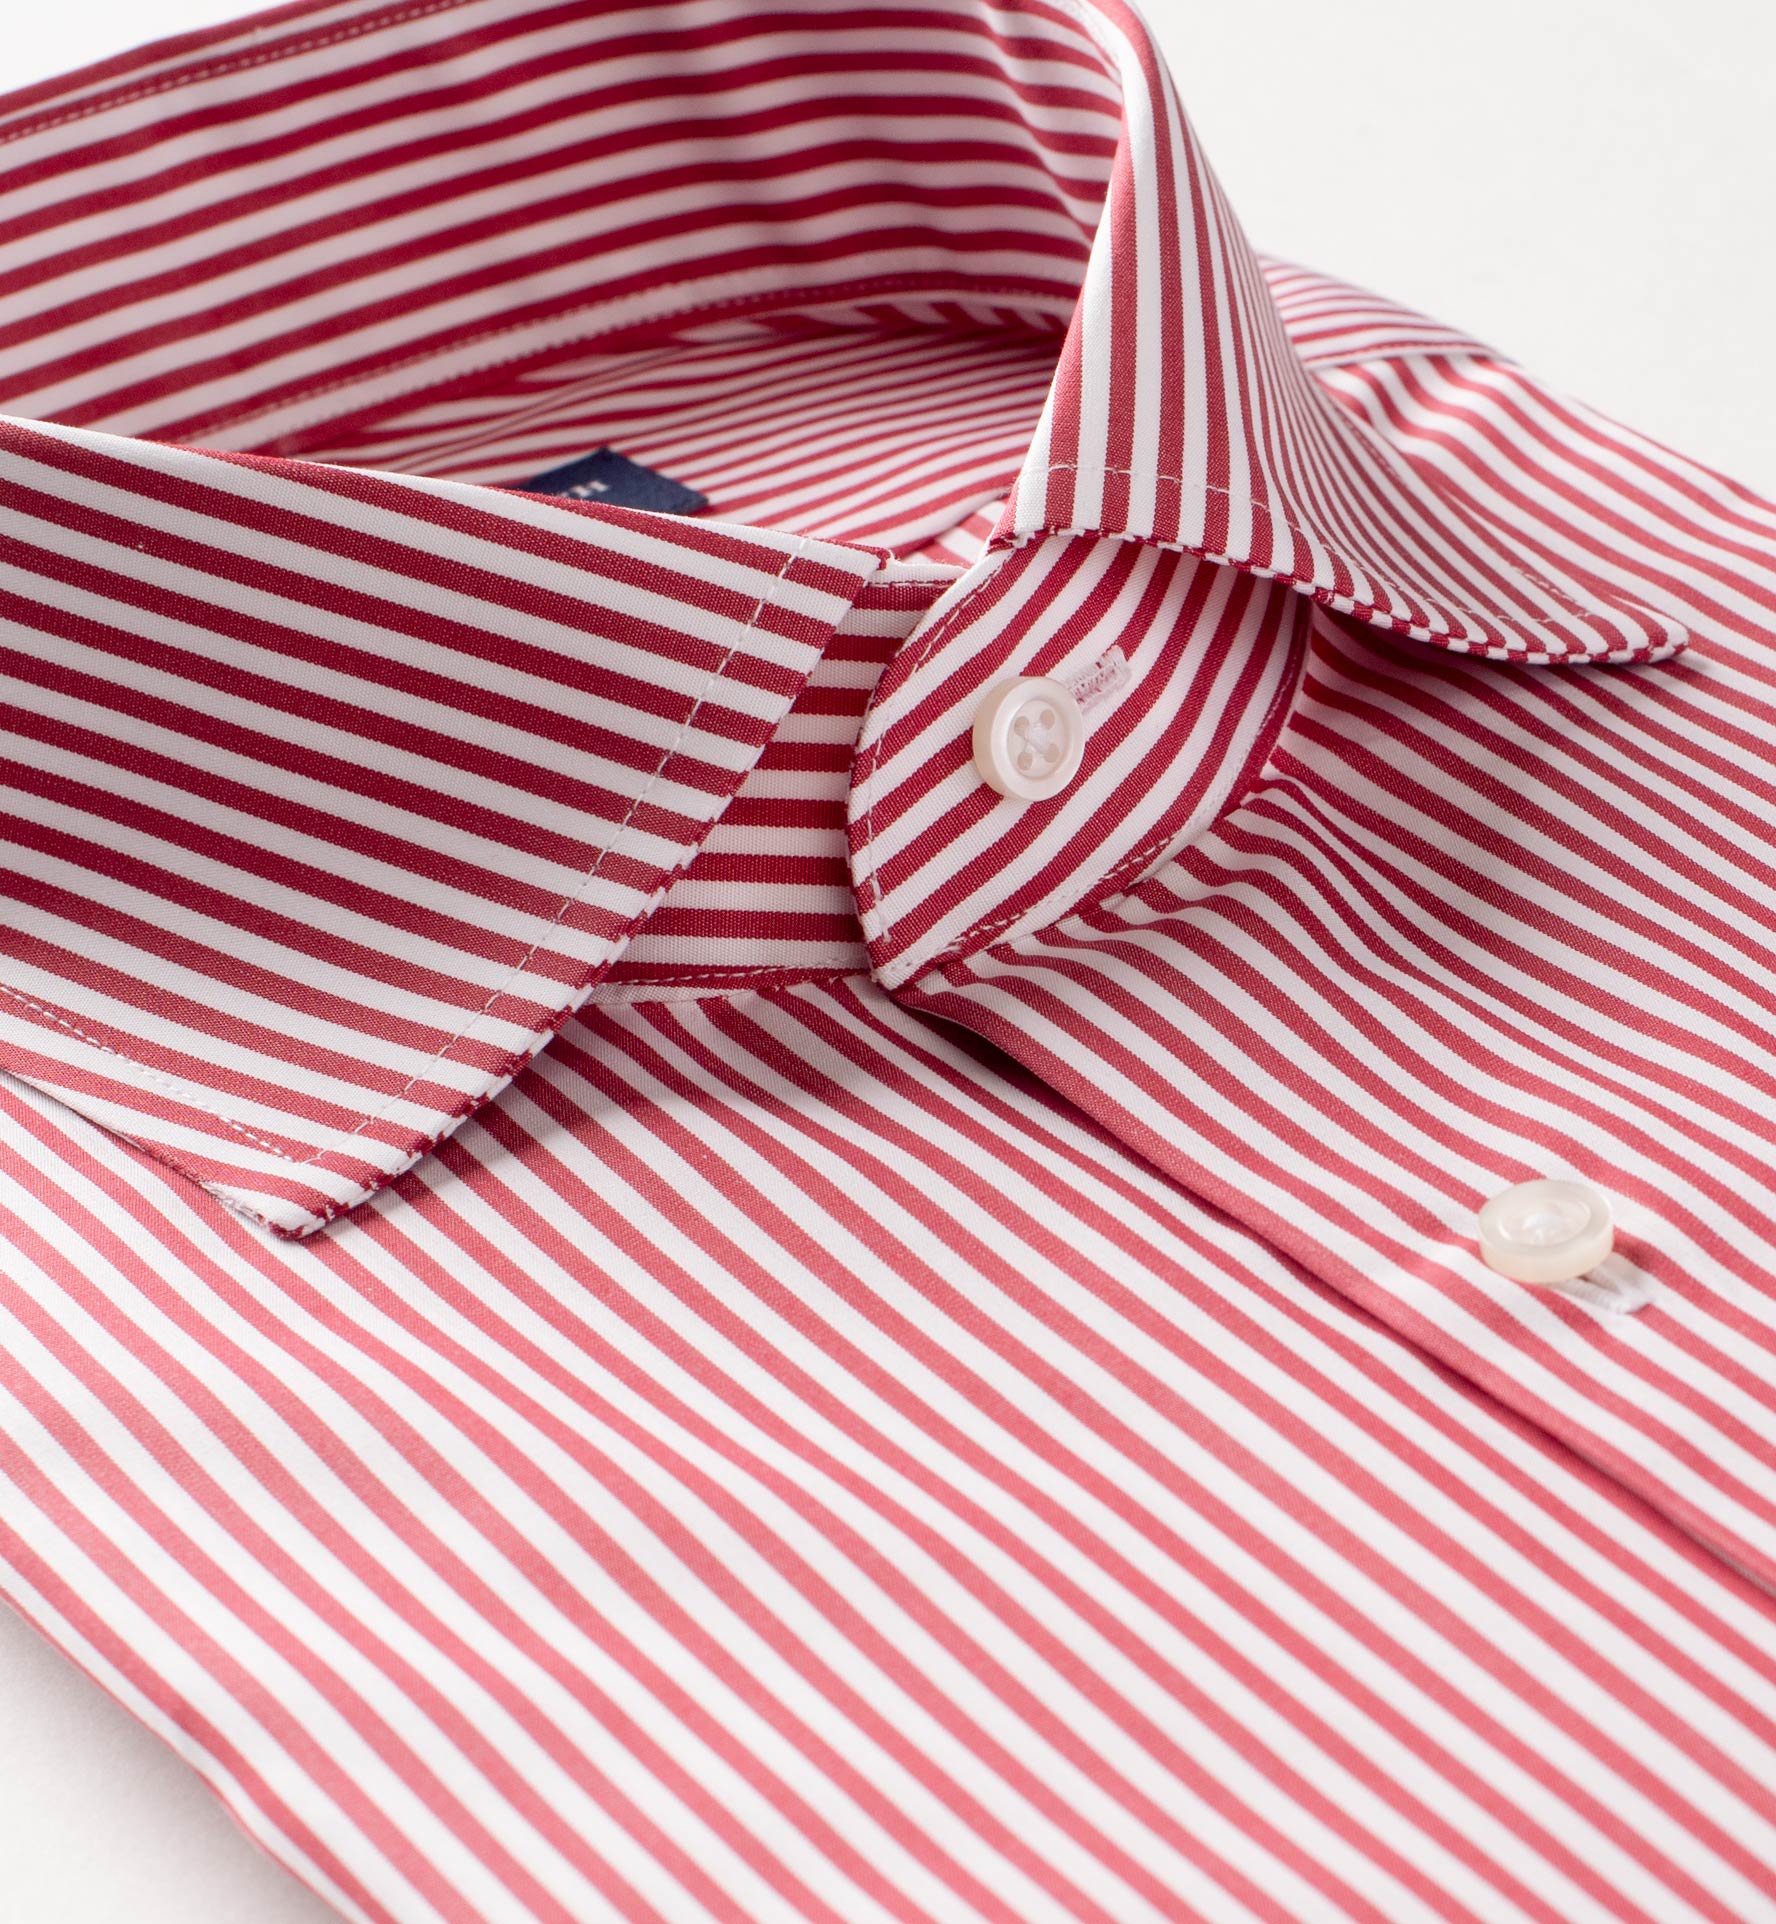 Stanton 120s Red Bengal Stripe Men's Dress Shirt by Proper Cloth